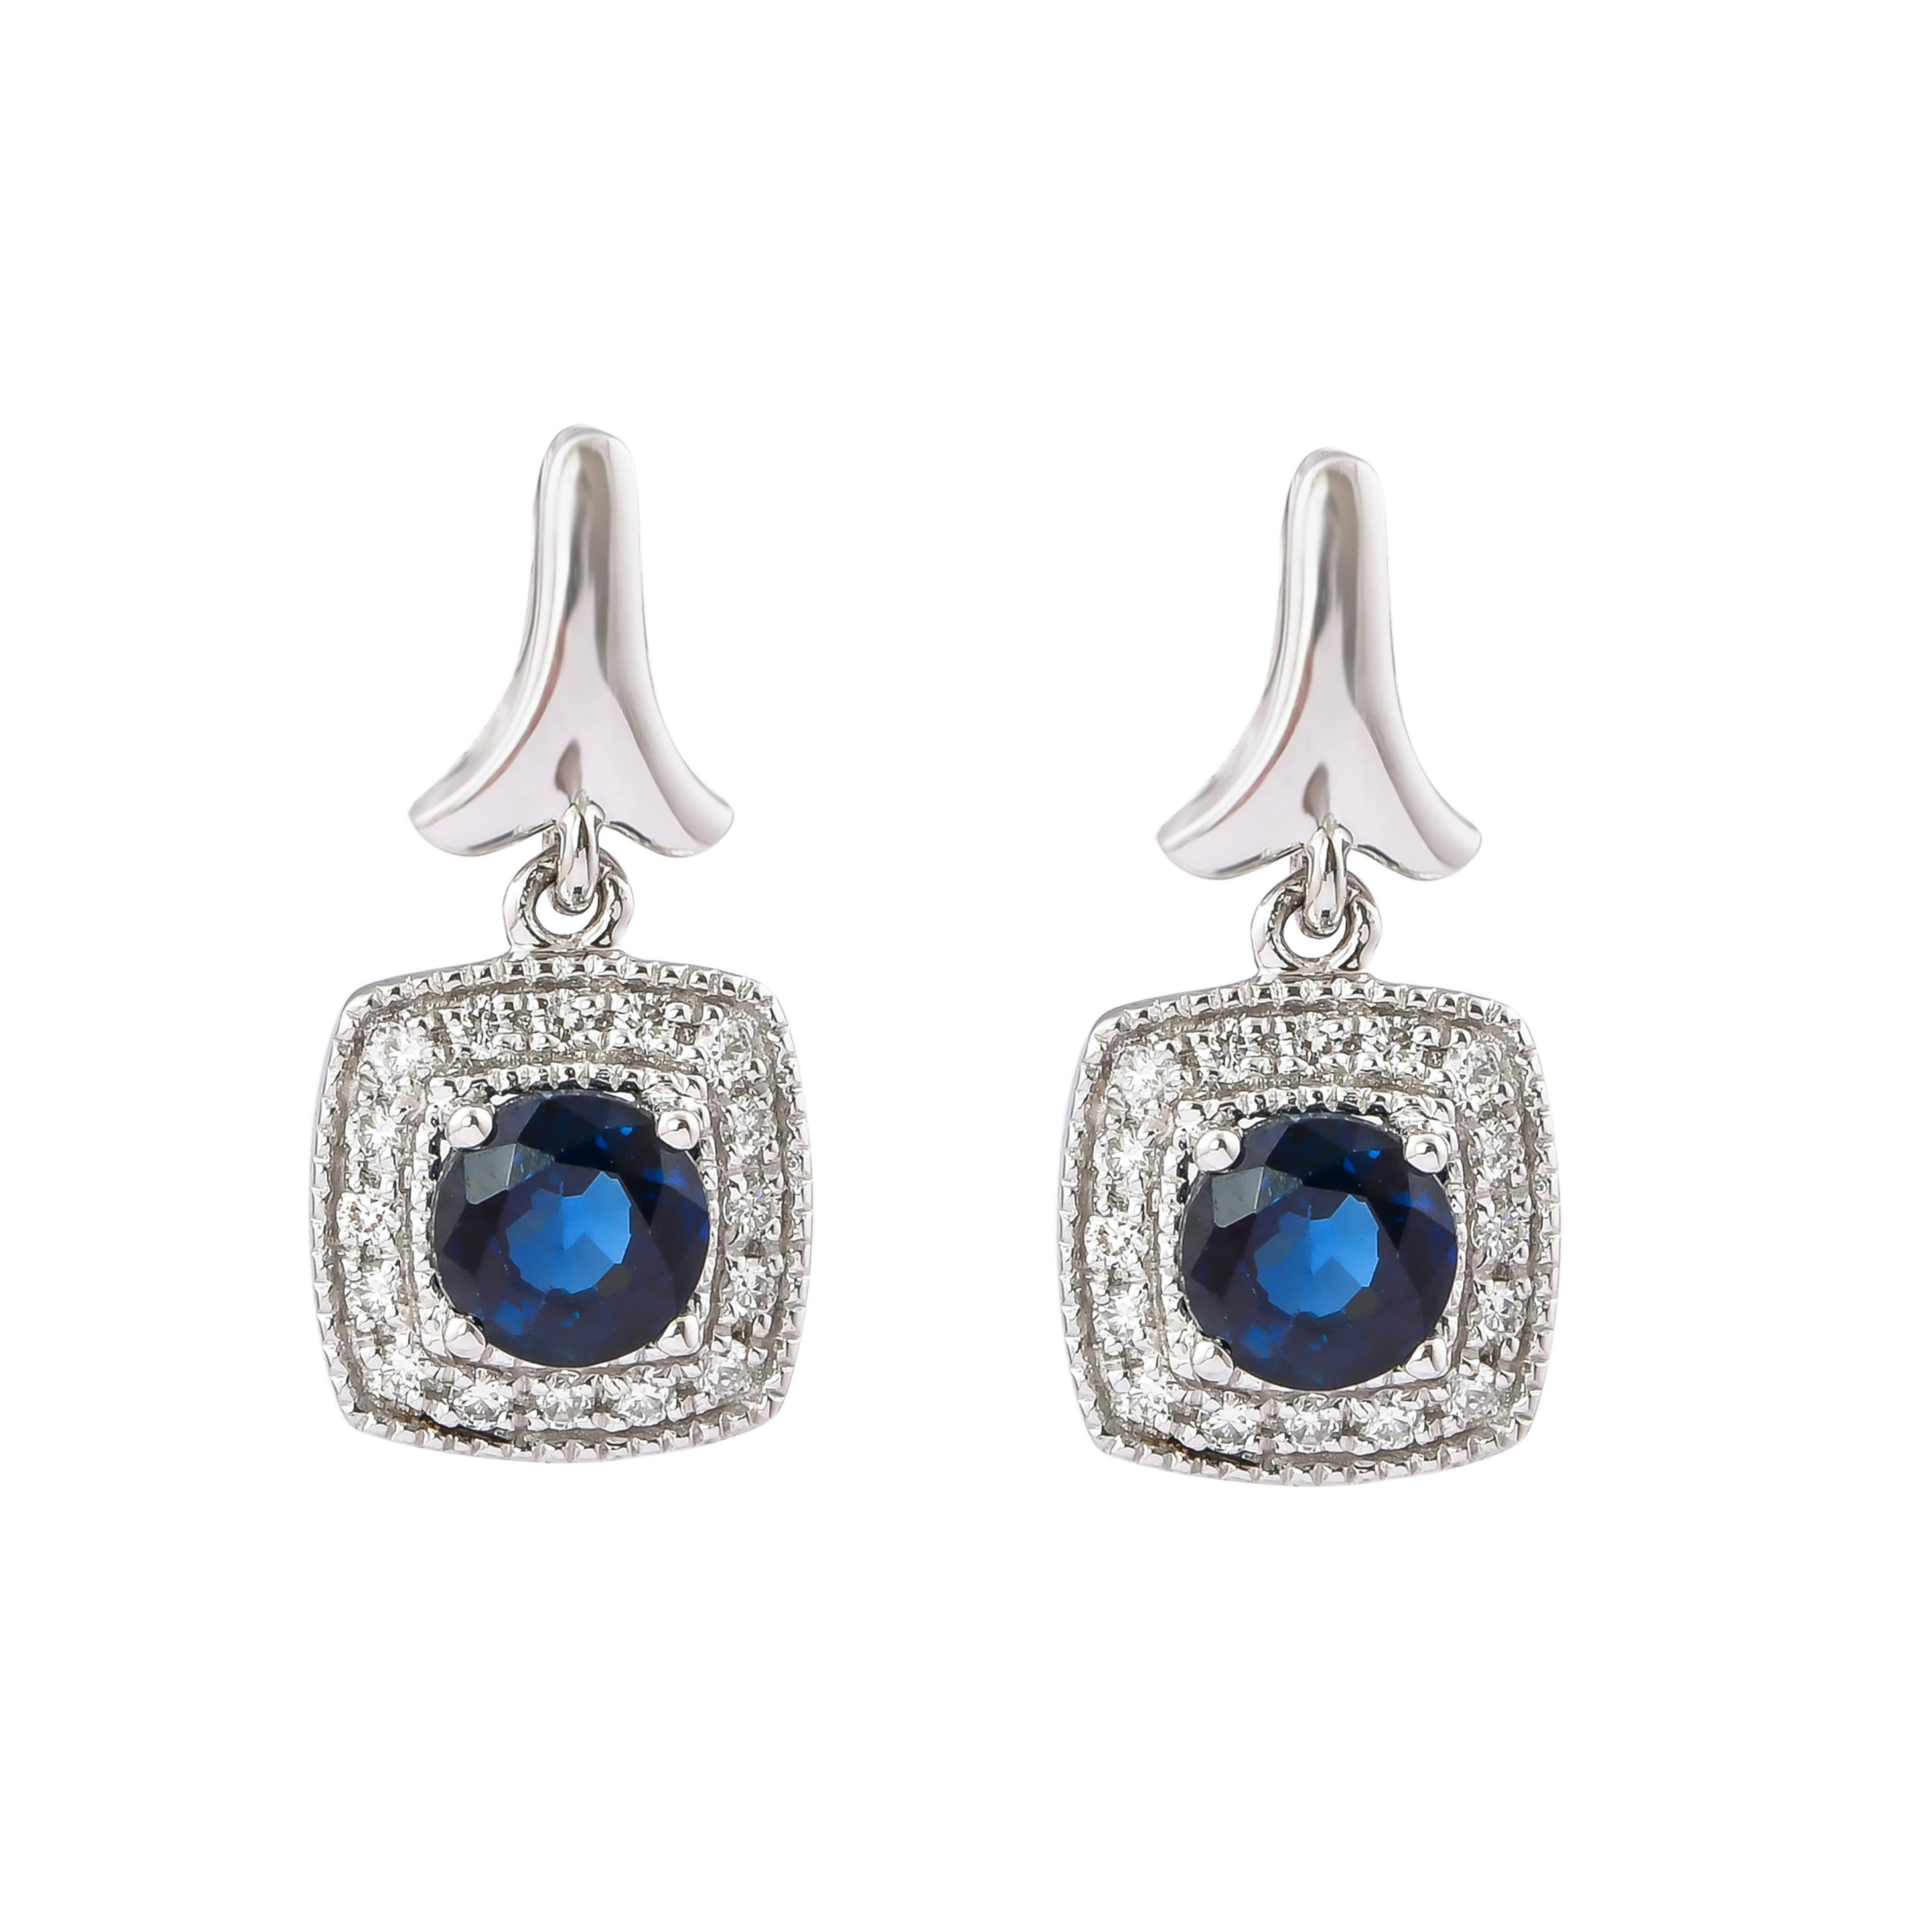 Round Cut 0.8 Carat Blue Sapphire and Diamond Earring in 18 Karat White Gold